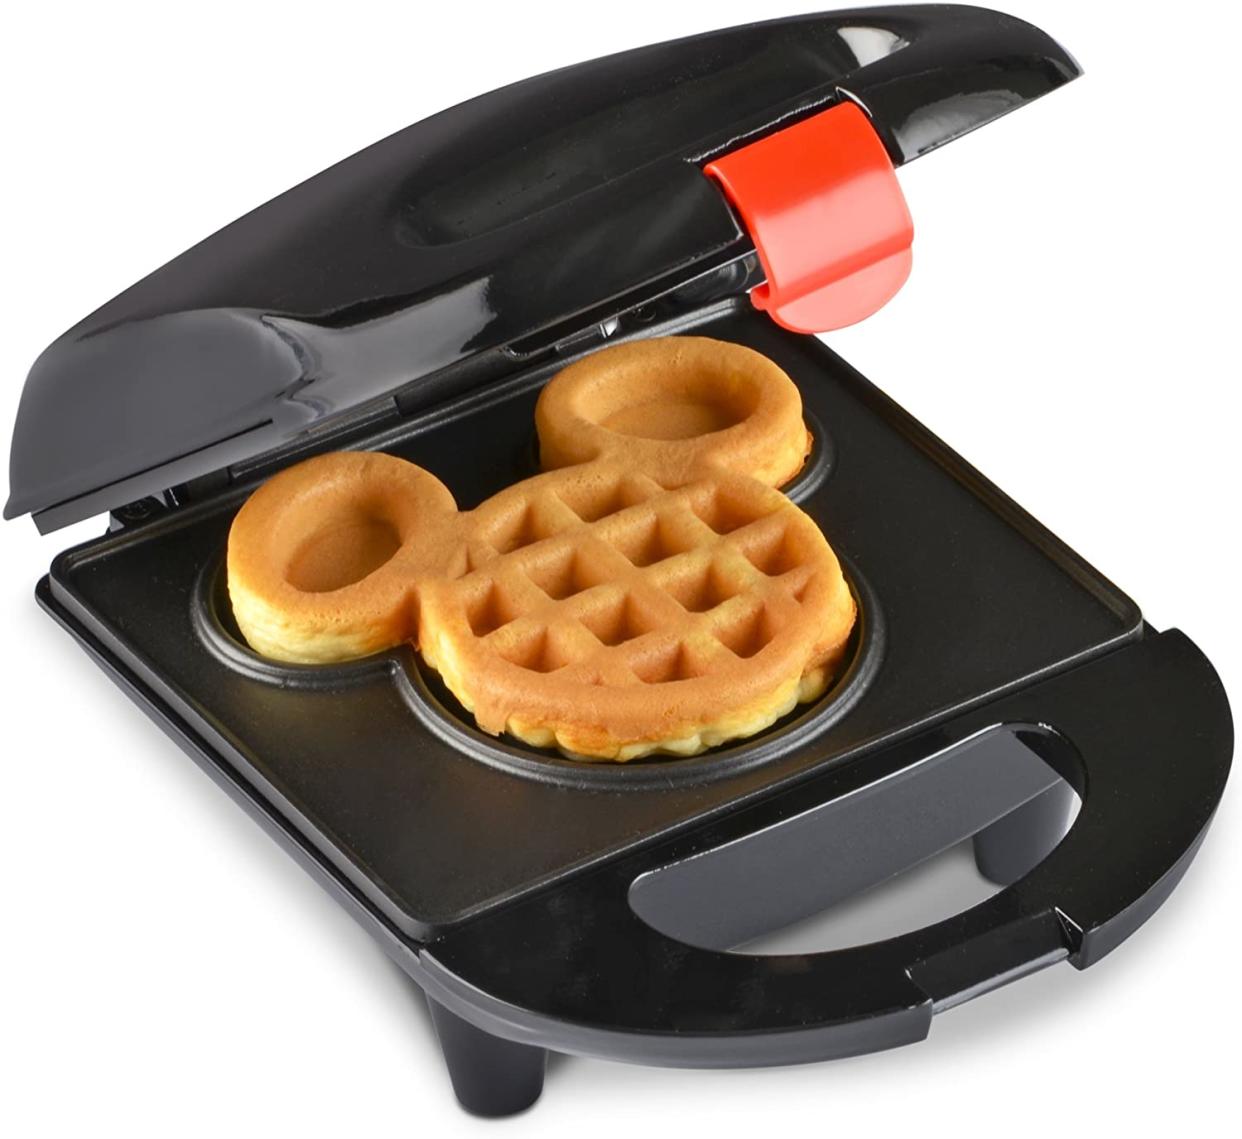 Mickey Mouse-shaped waffle maker.